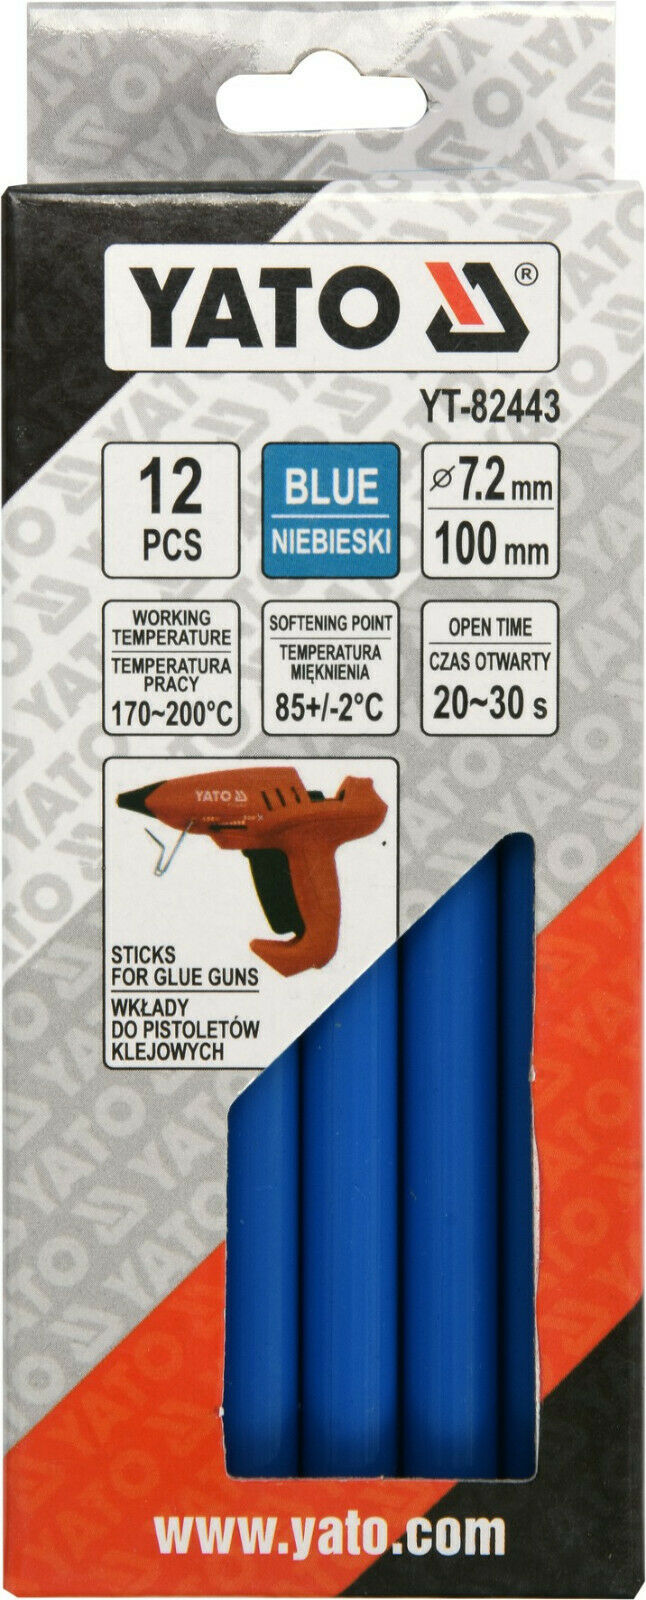 Yato yt-82443 hot adhesive sticks blue hot glue gun hot glue adhesive sticks